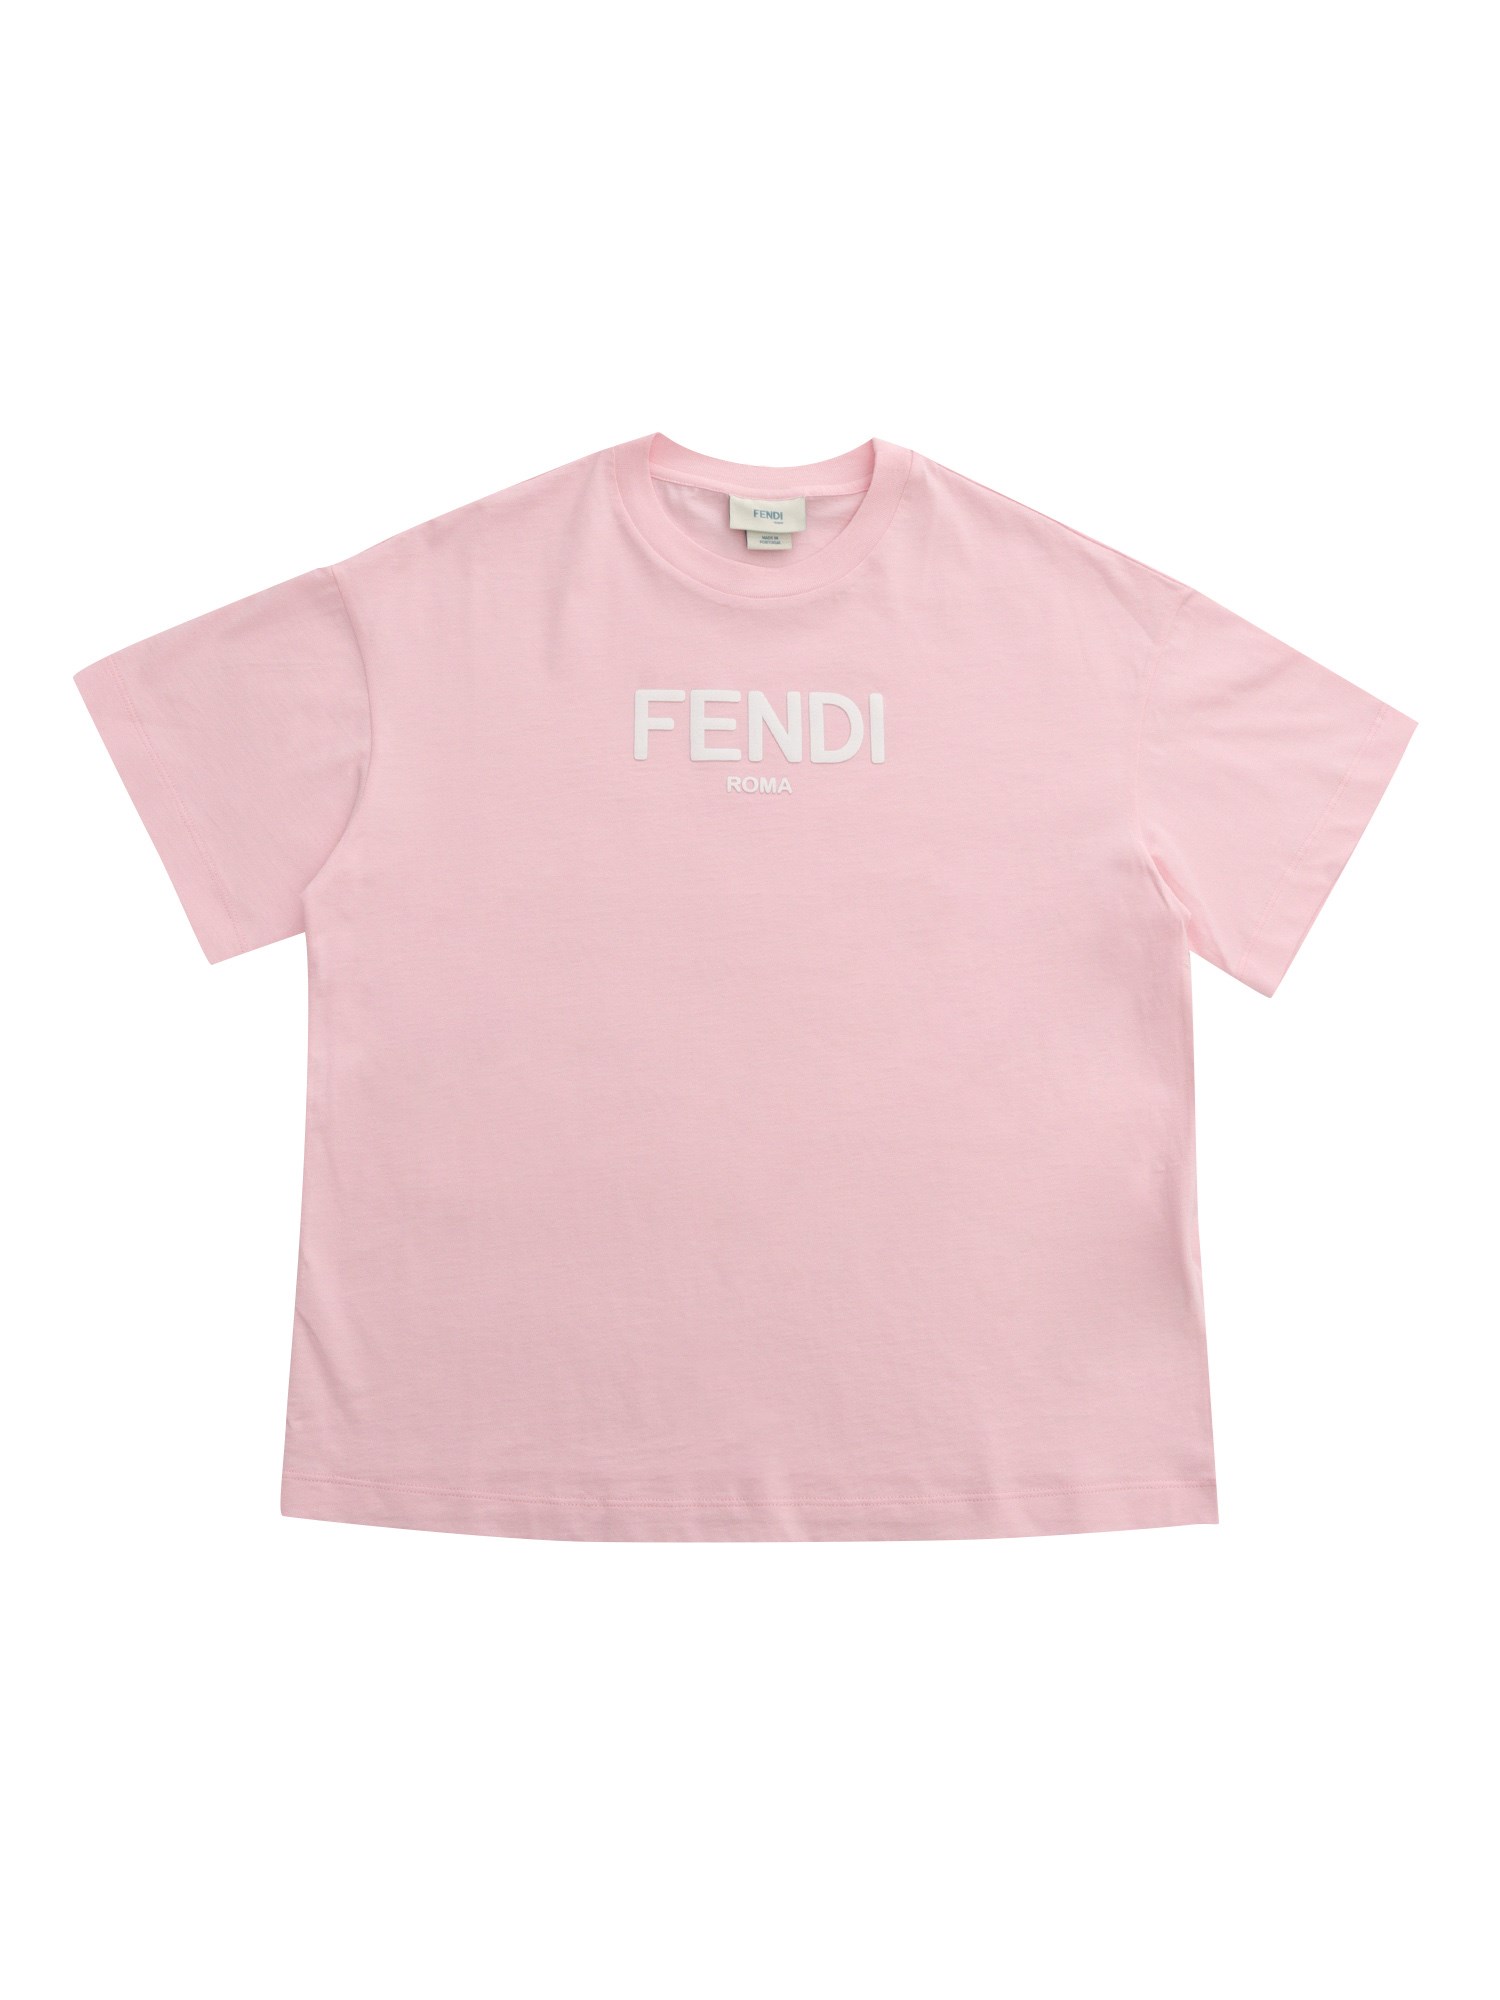 Fendi Jr Pink Fendi T-shirt In White